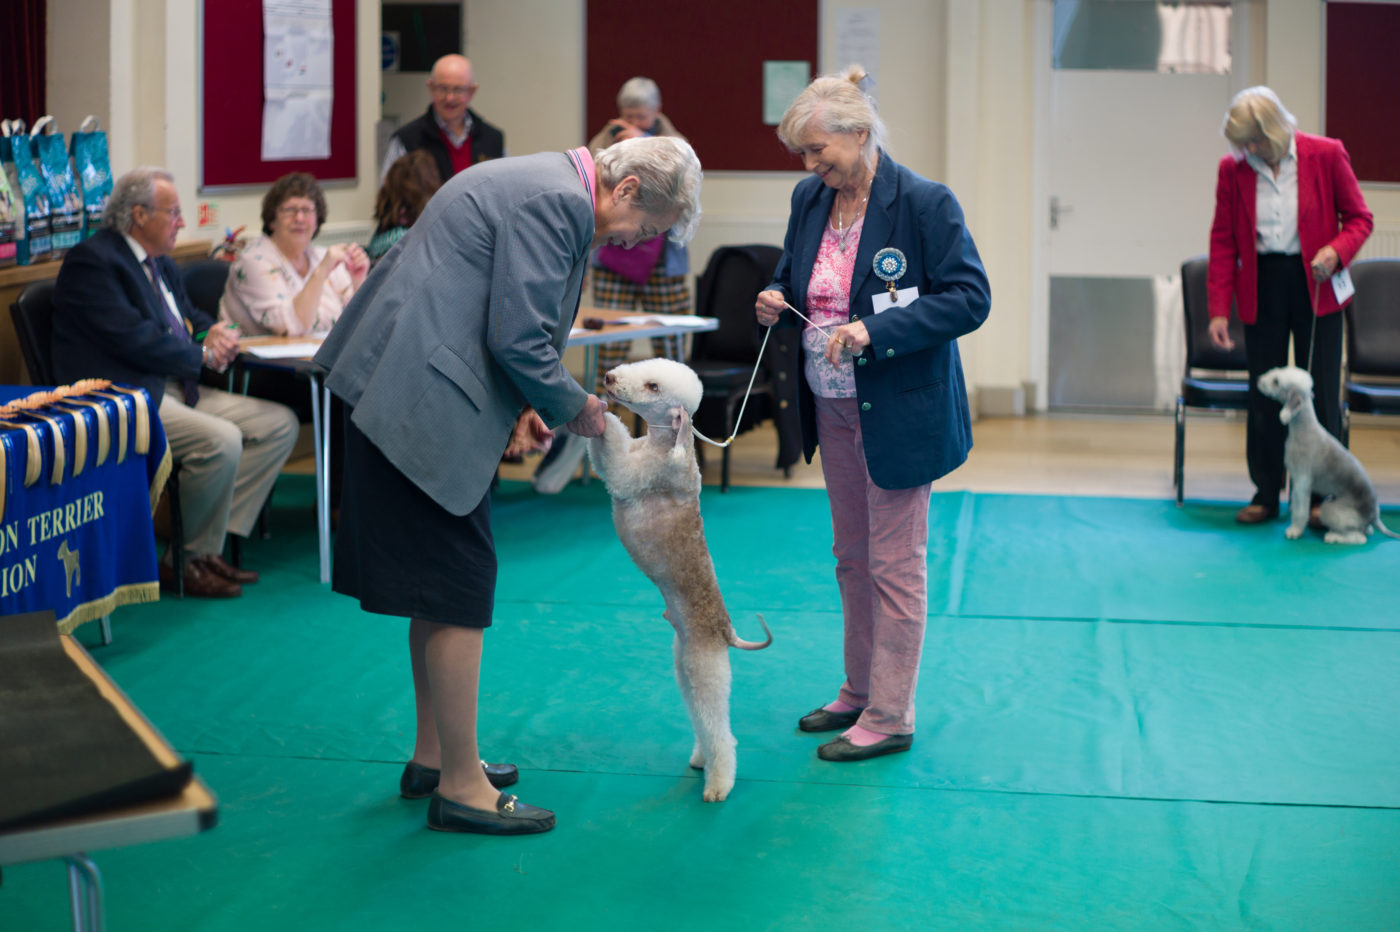 The Bedlington Terrier Association